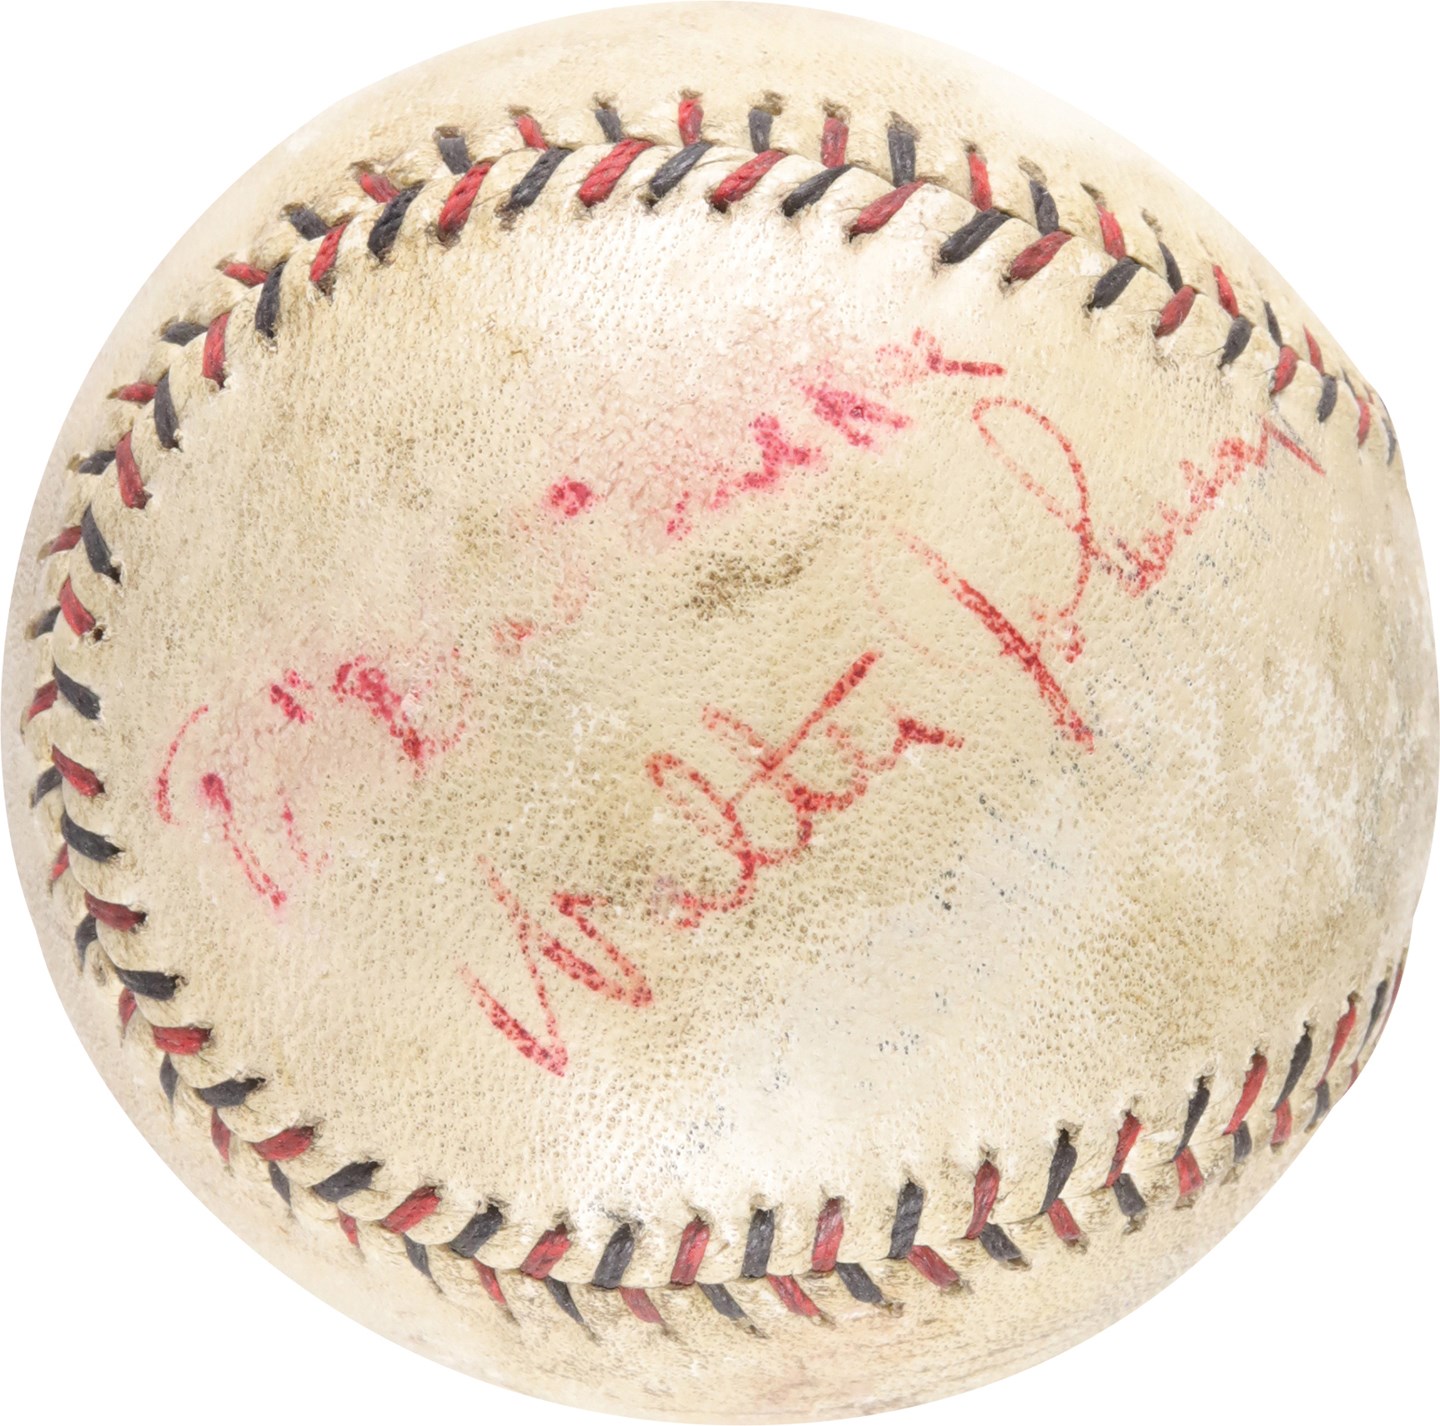 Baseball Autographs - 1920s Walter Johnson Single-Signed Baseball (JSA)